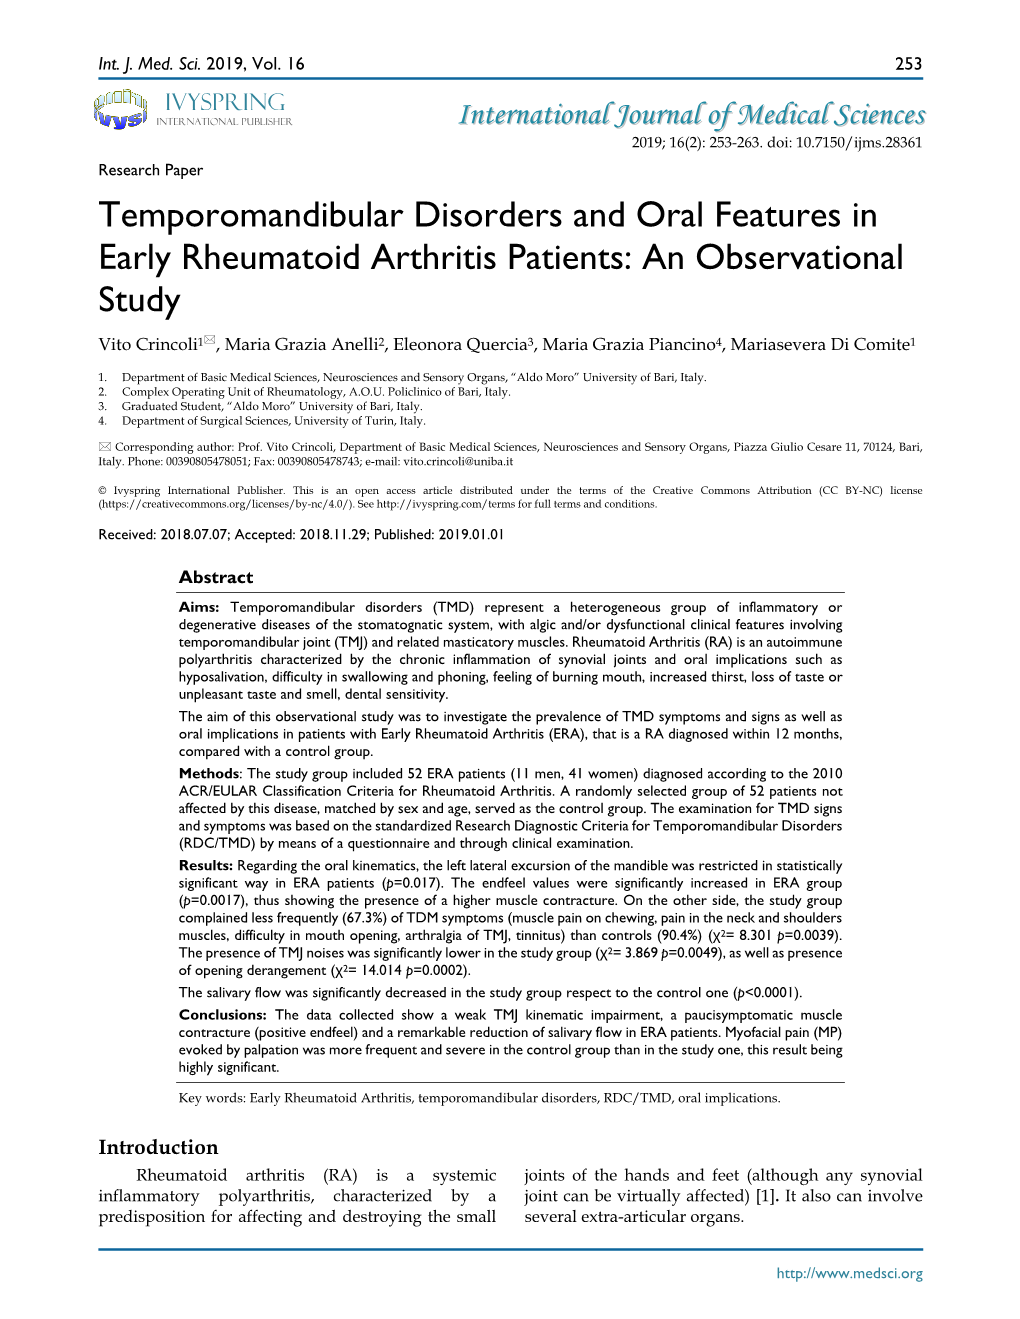 Temporomandibular Disorders and Oral Features in Early Rheumatoid